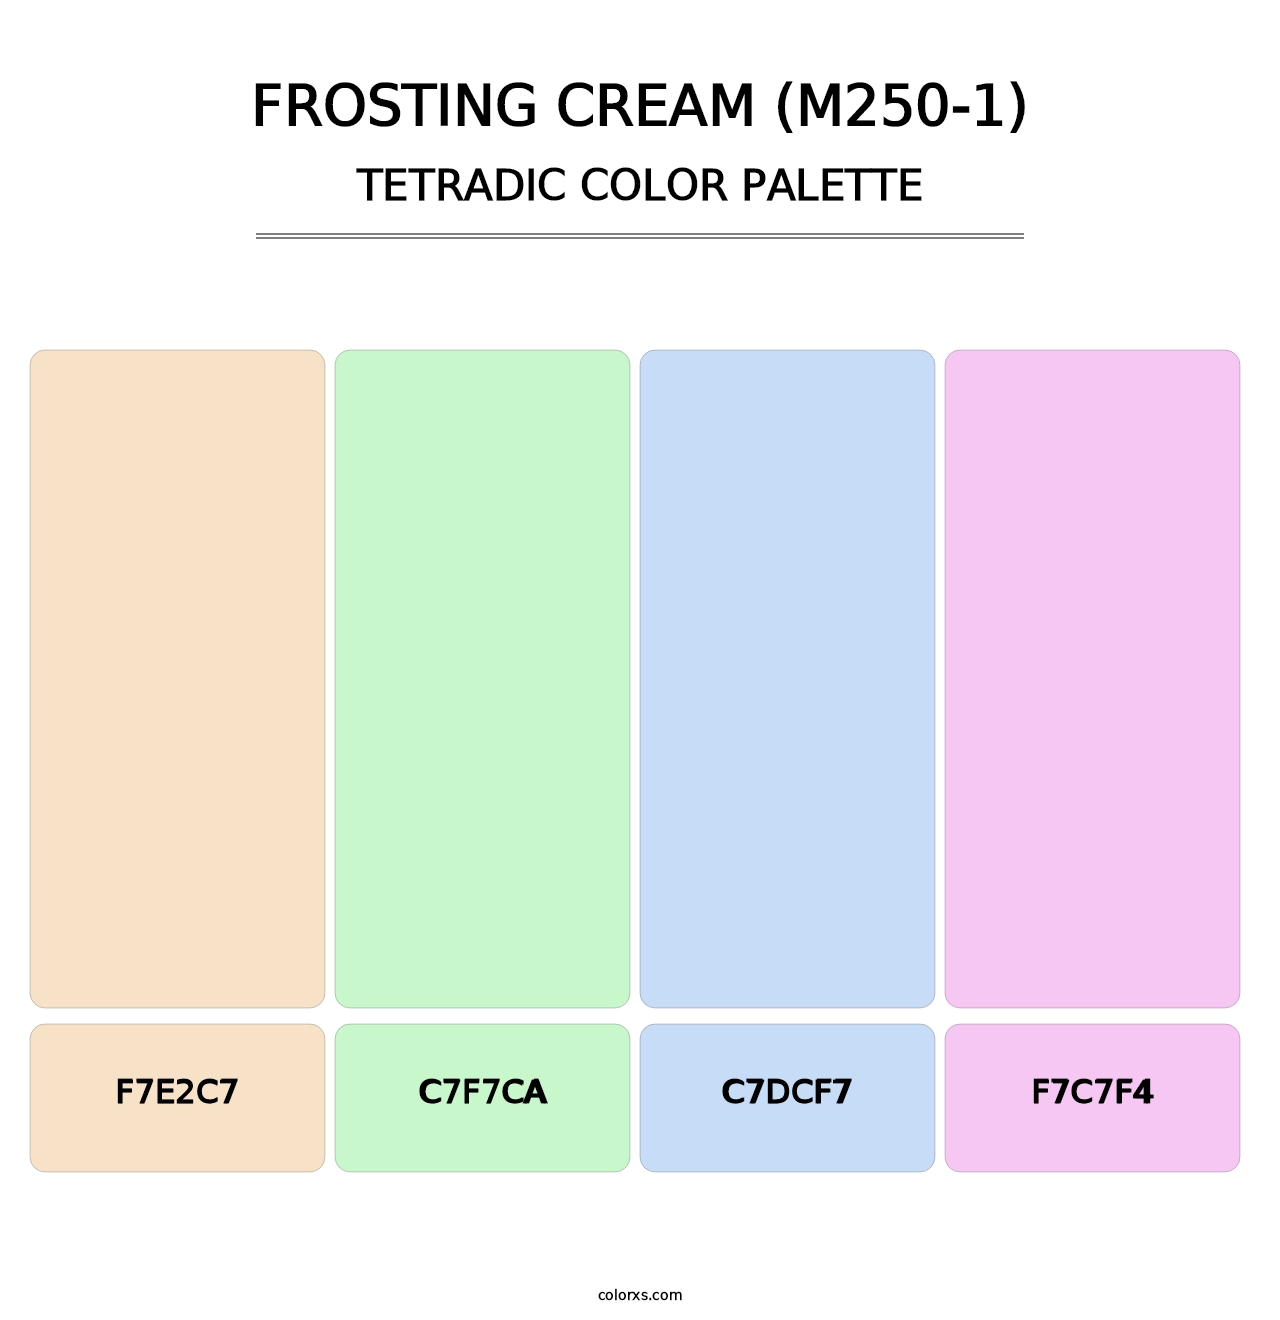 Frosting Cream (M250-1) - Tetradic Color Palette